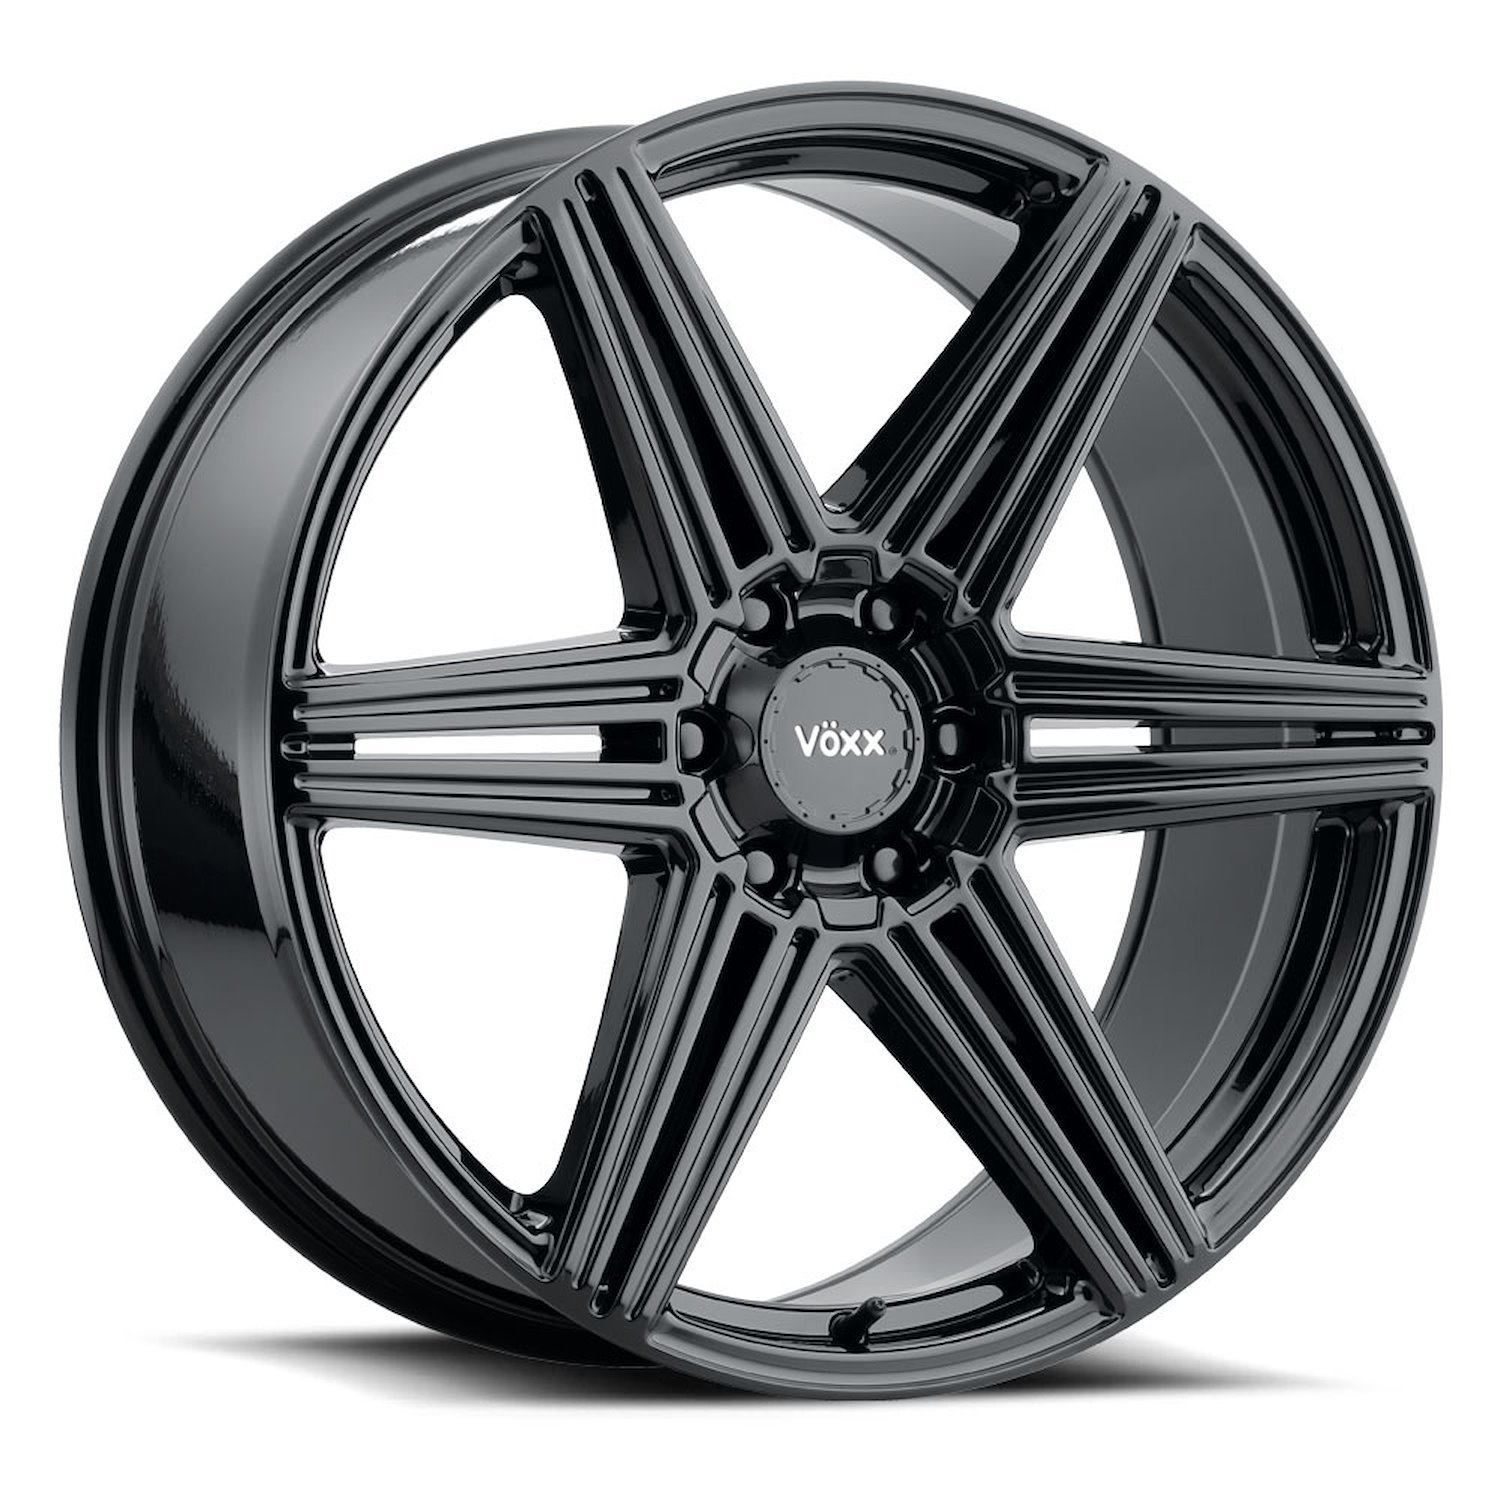 SOT 285-6009-18 GB Sotto Wheel [Size: 20" x 8.50"] Finish: Gloss Black